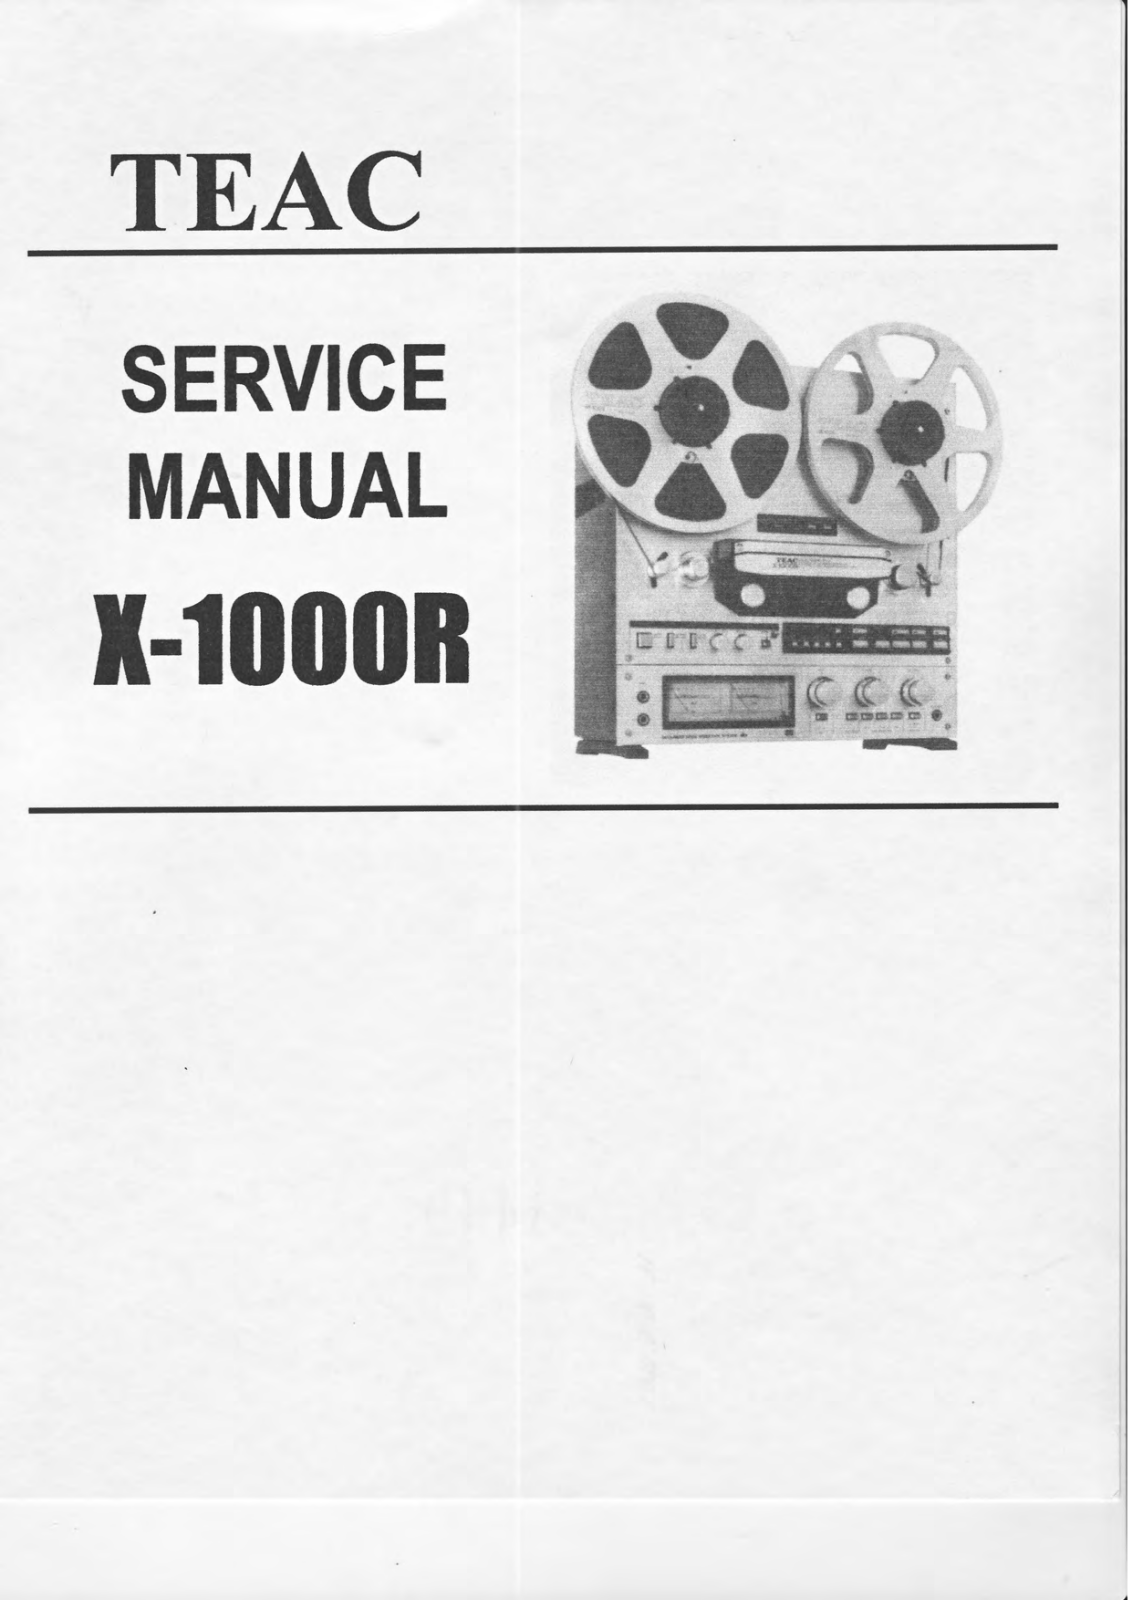 TEAC X-1000-R Service manual